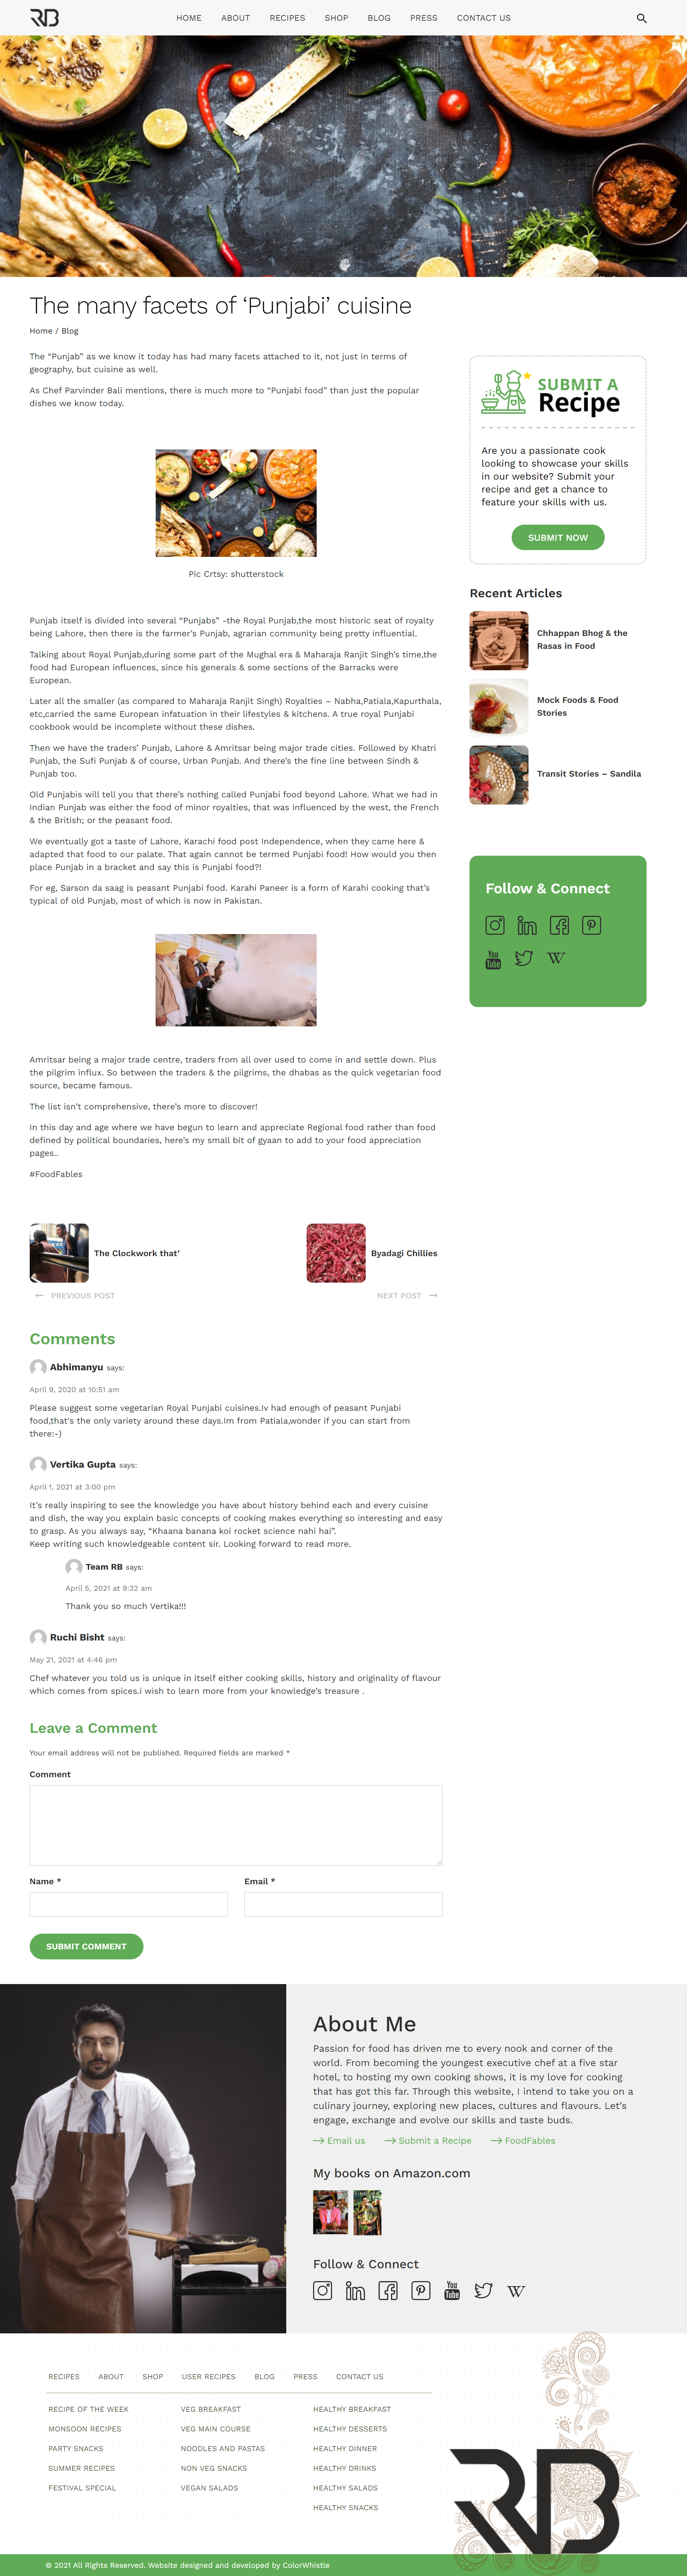 blog detailed page - Celebrity Chef Website Design & Development Using WordPress